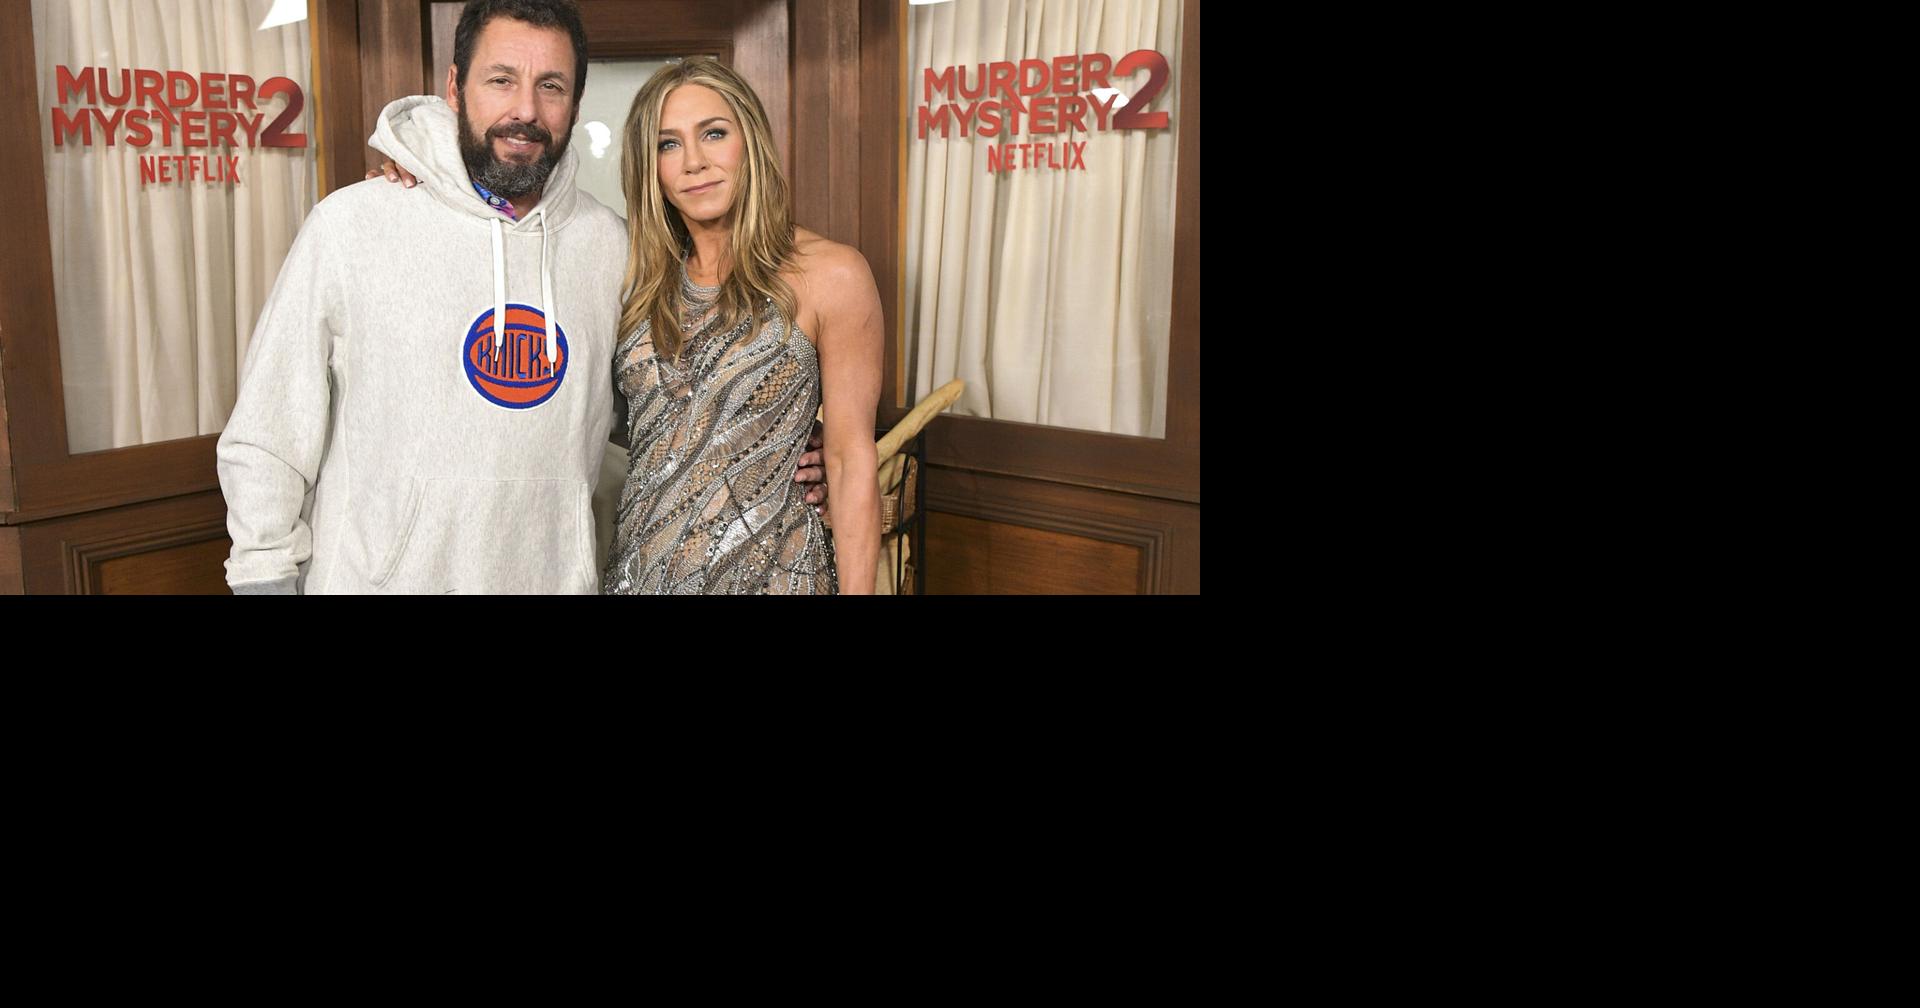 Murder Mystery' stars Jennifer Aniston, Adam Sandler say who they